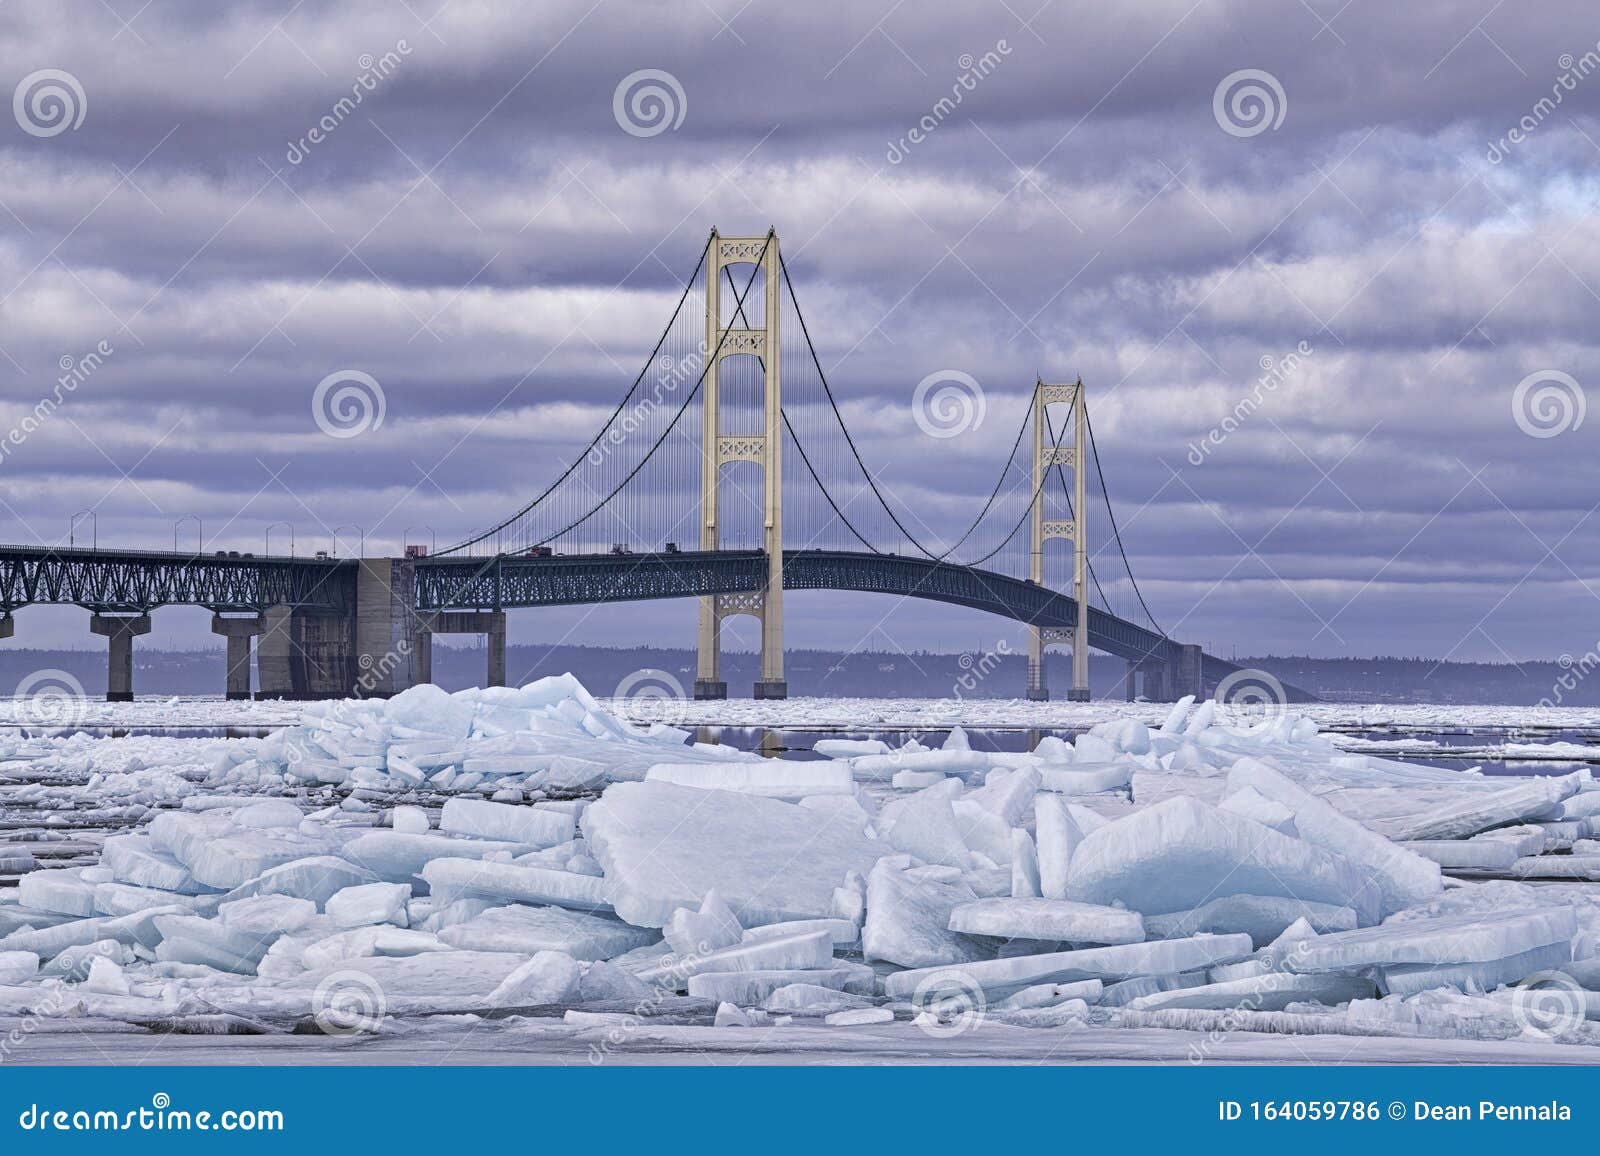 blue ice shards and mackinac bridge